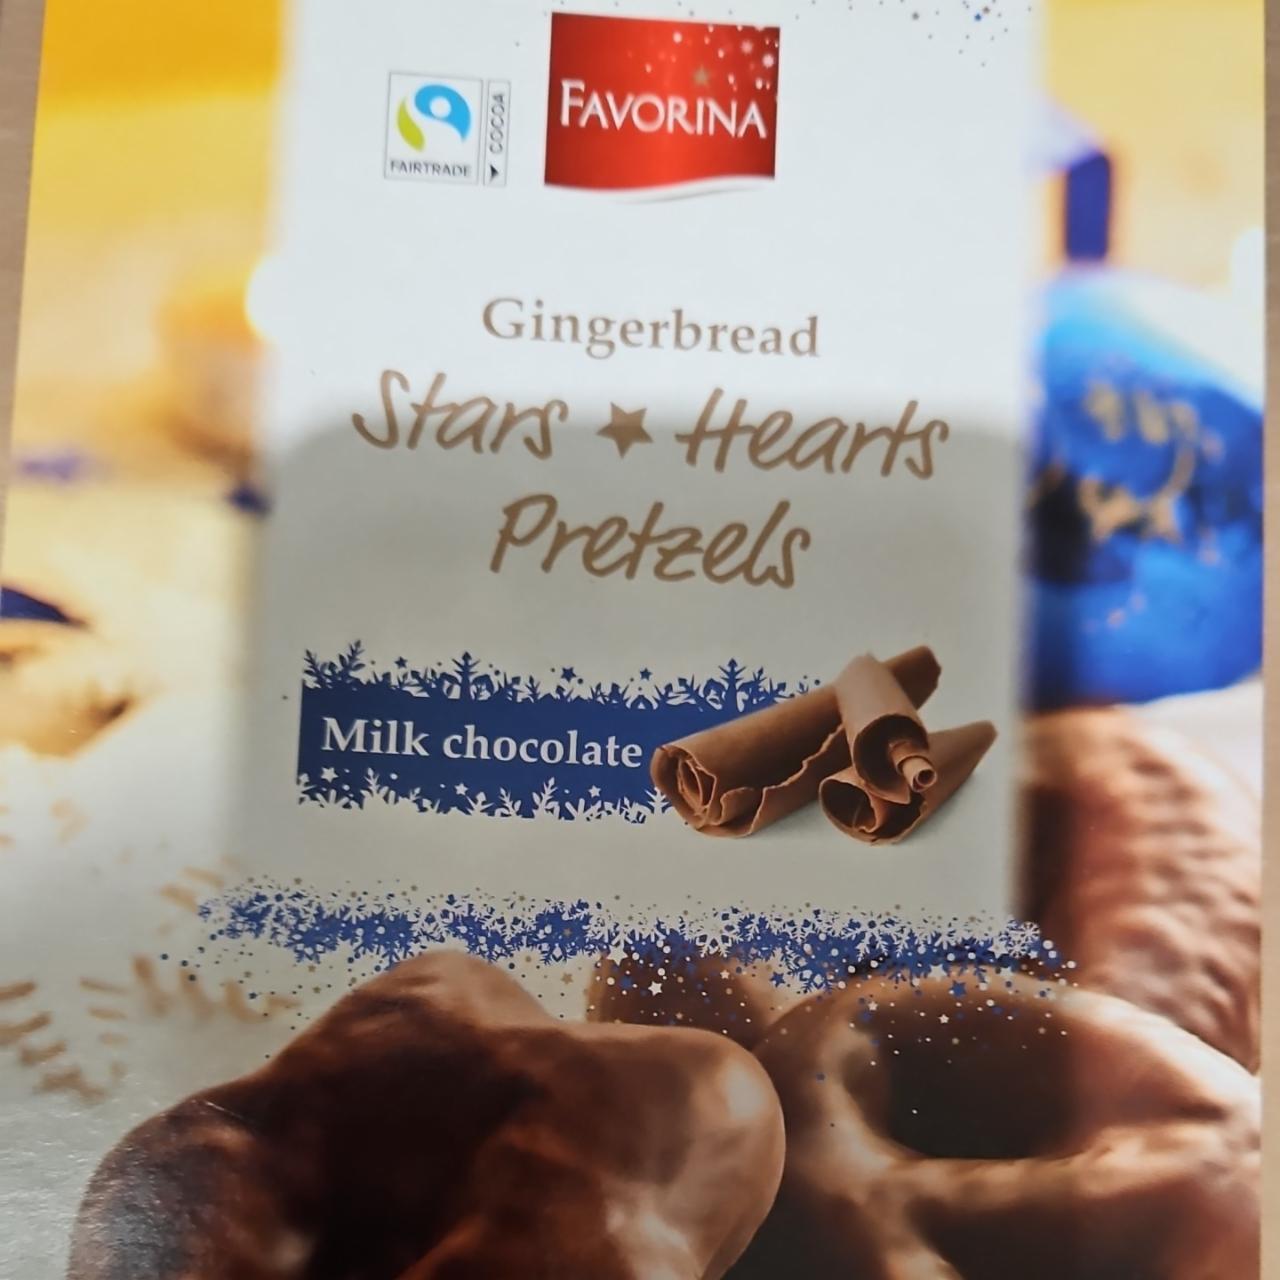 Fotografie - Gingerbread Stars Hearts Pretzels Milk Chocolate Favorina